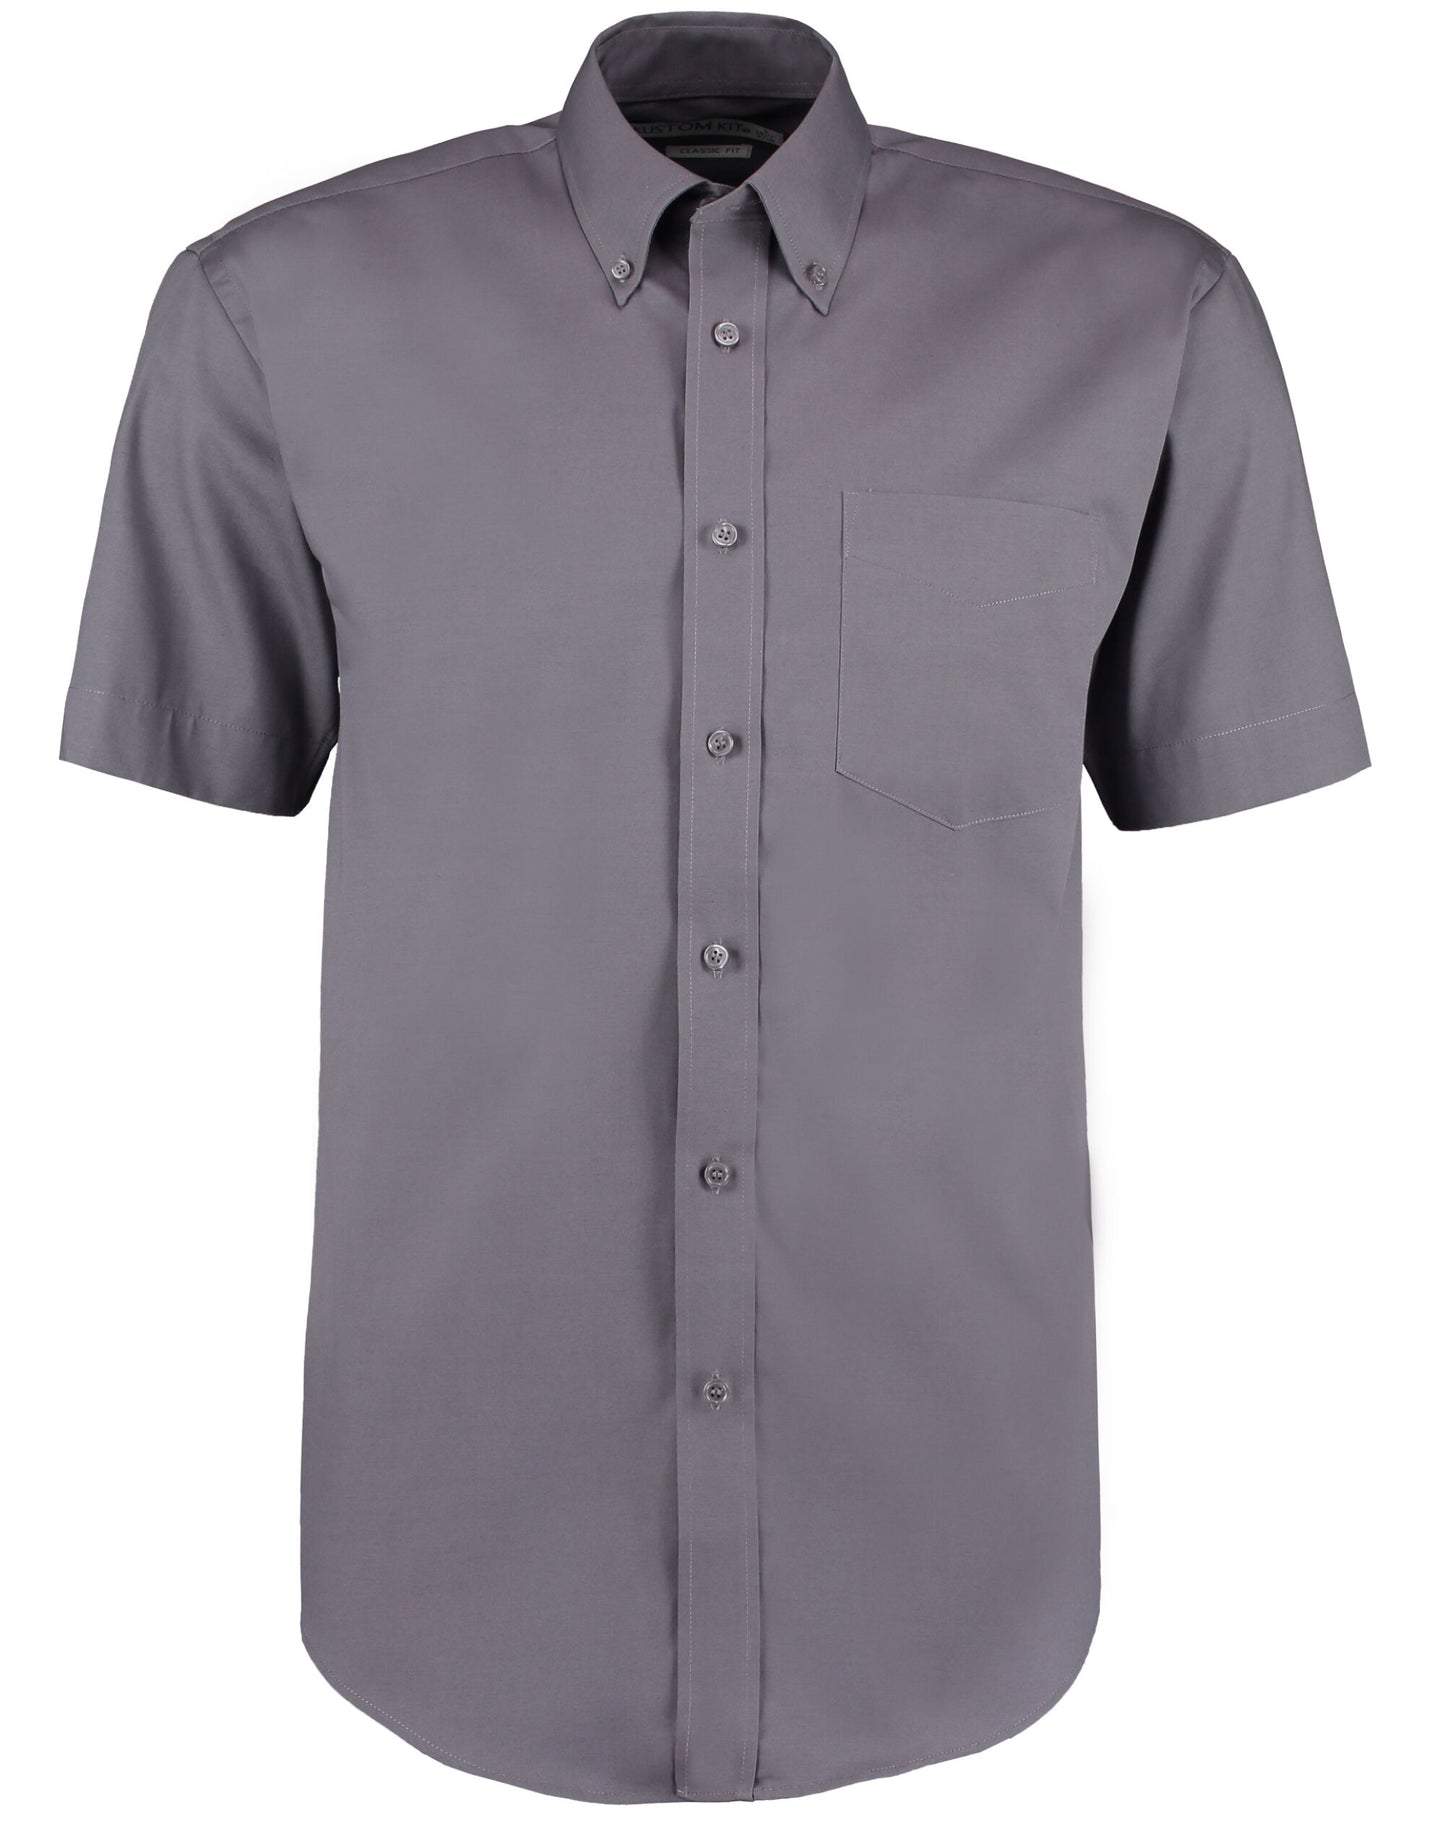 KK109 Kustom Kit Premium Oxford Shirt Short Sleeve